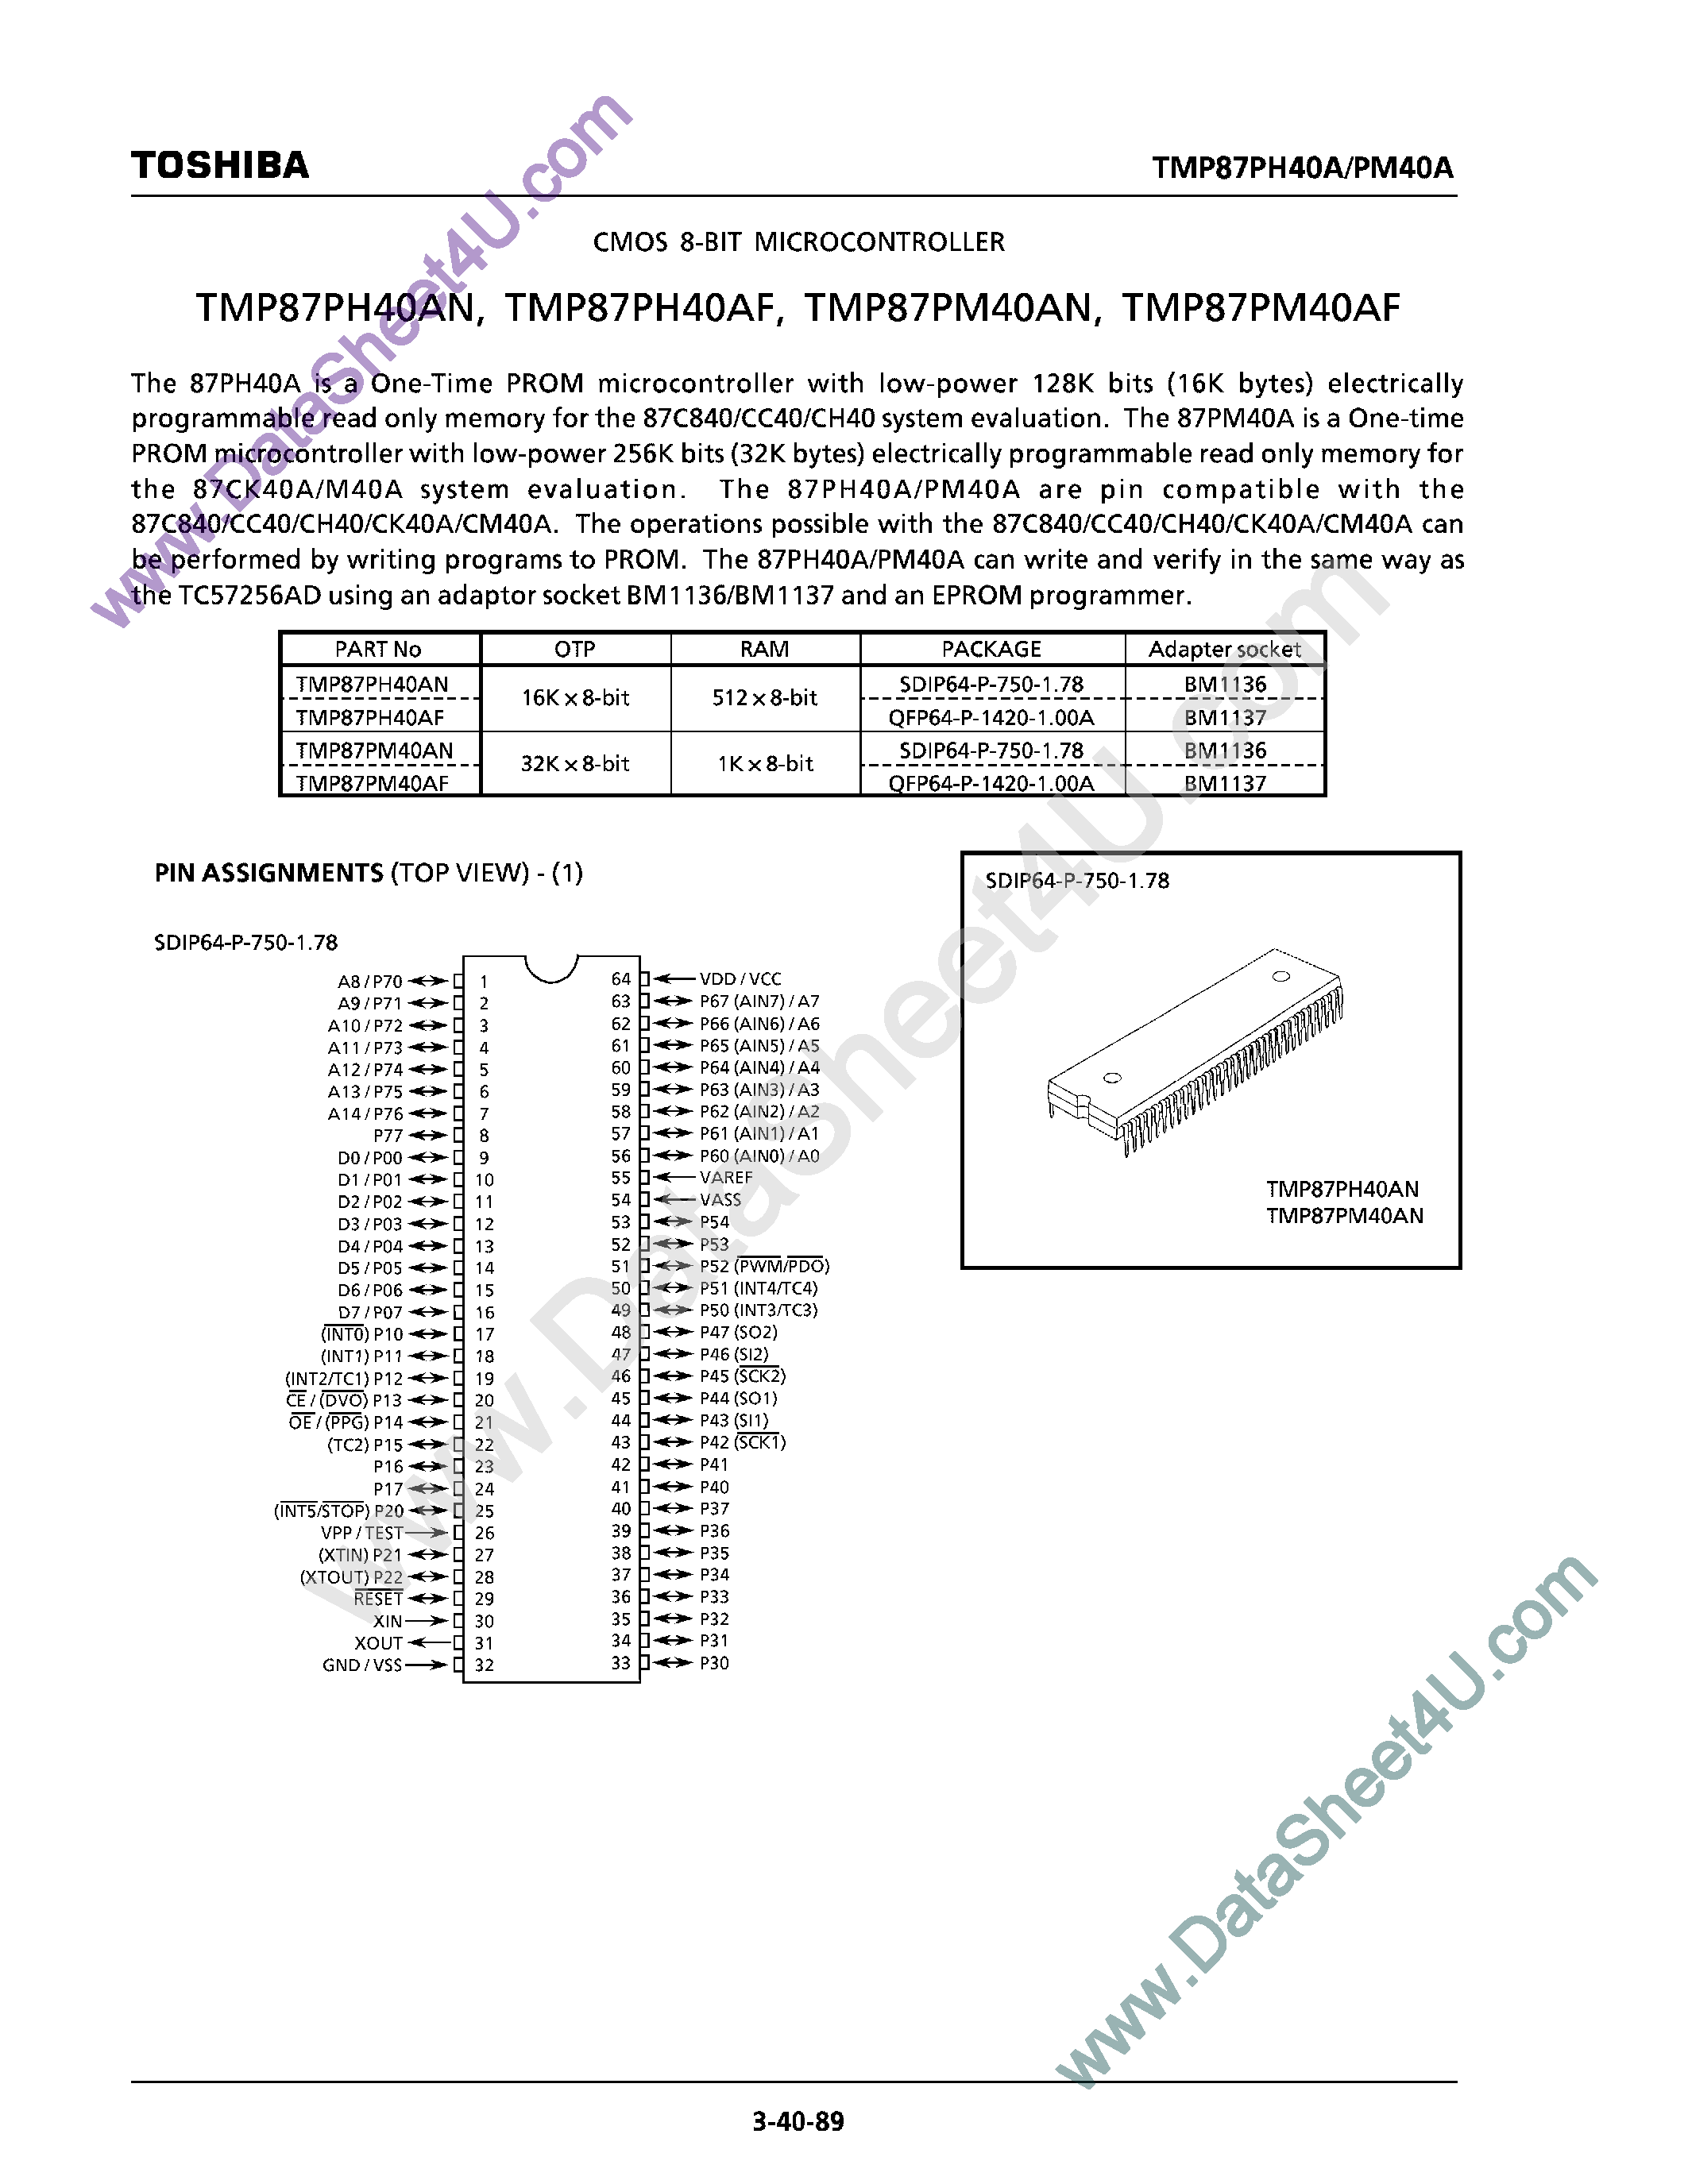 Datasheet TMP87PH40AF - (TMP87PM40AF/AN / TMP87PH40AF/AN) CMOS 8-Bit Microcontroller page 1